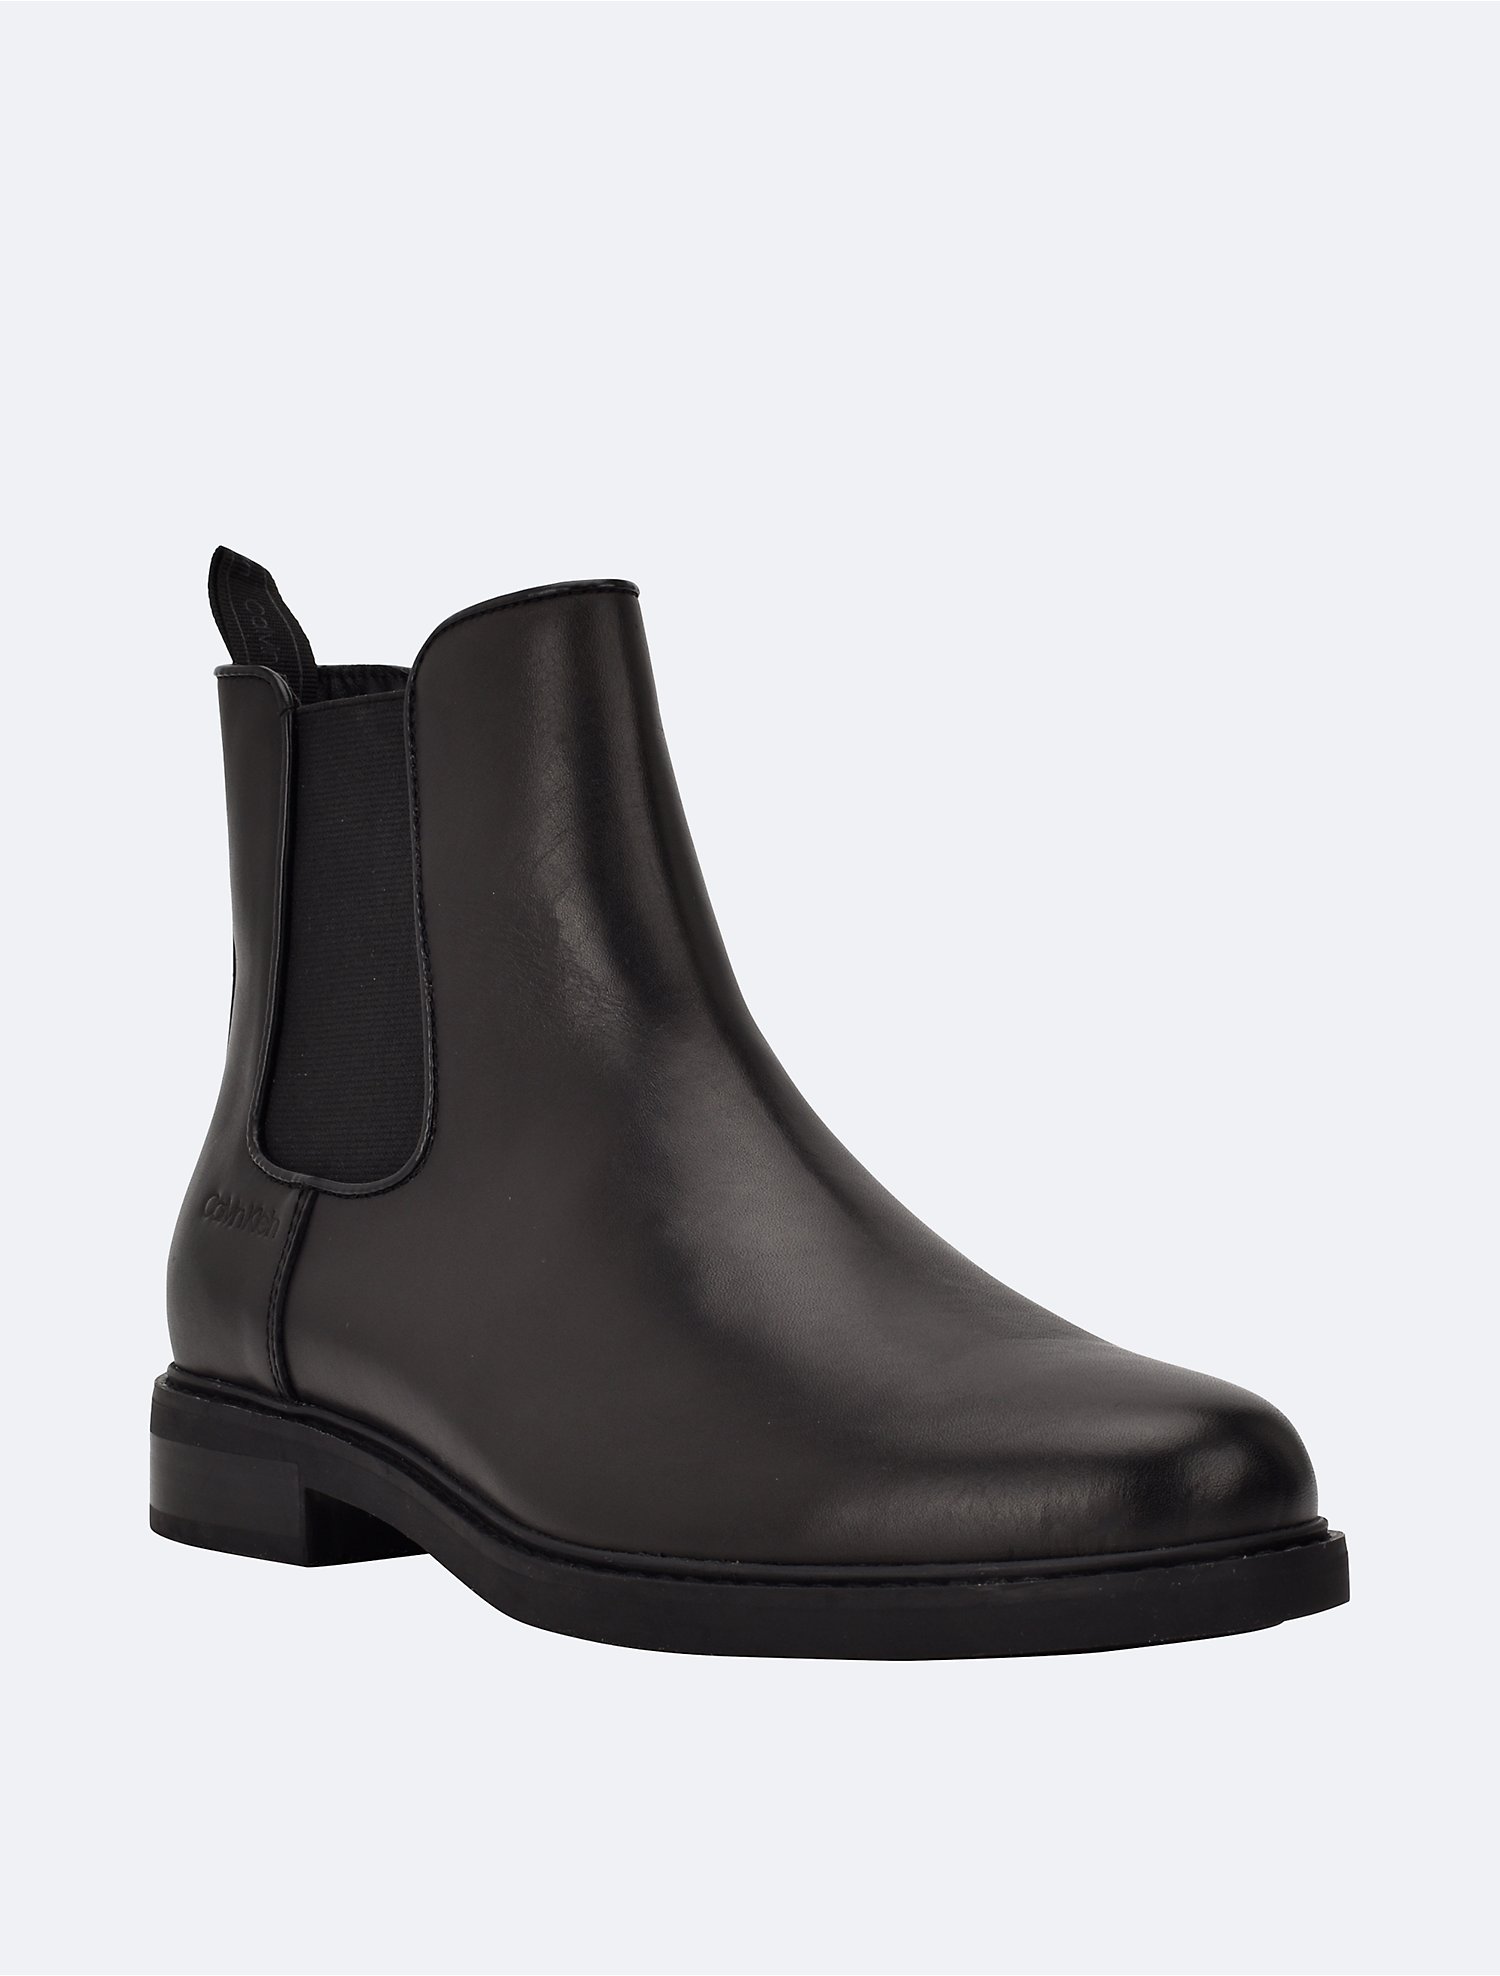 Descubrir 70+ imagen calvin klein black leather boots